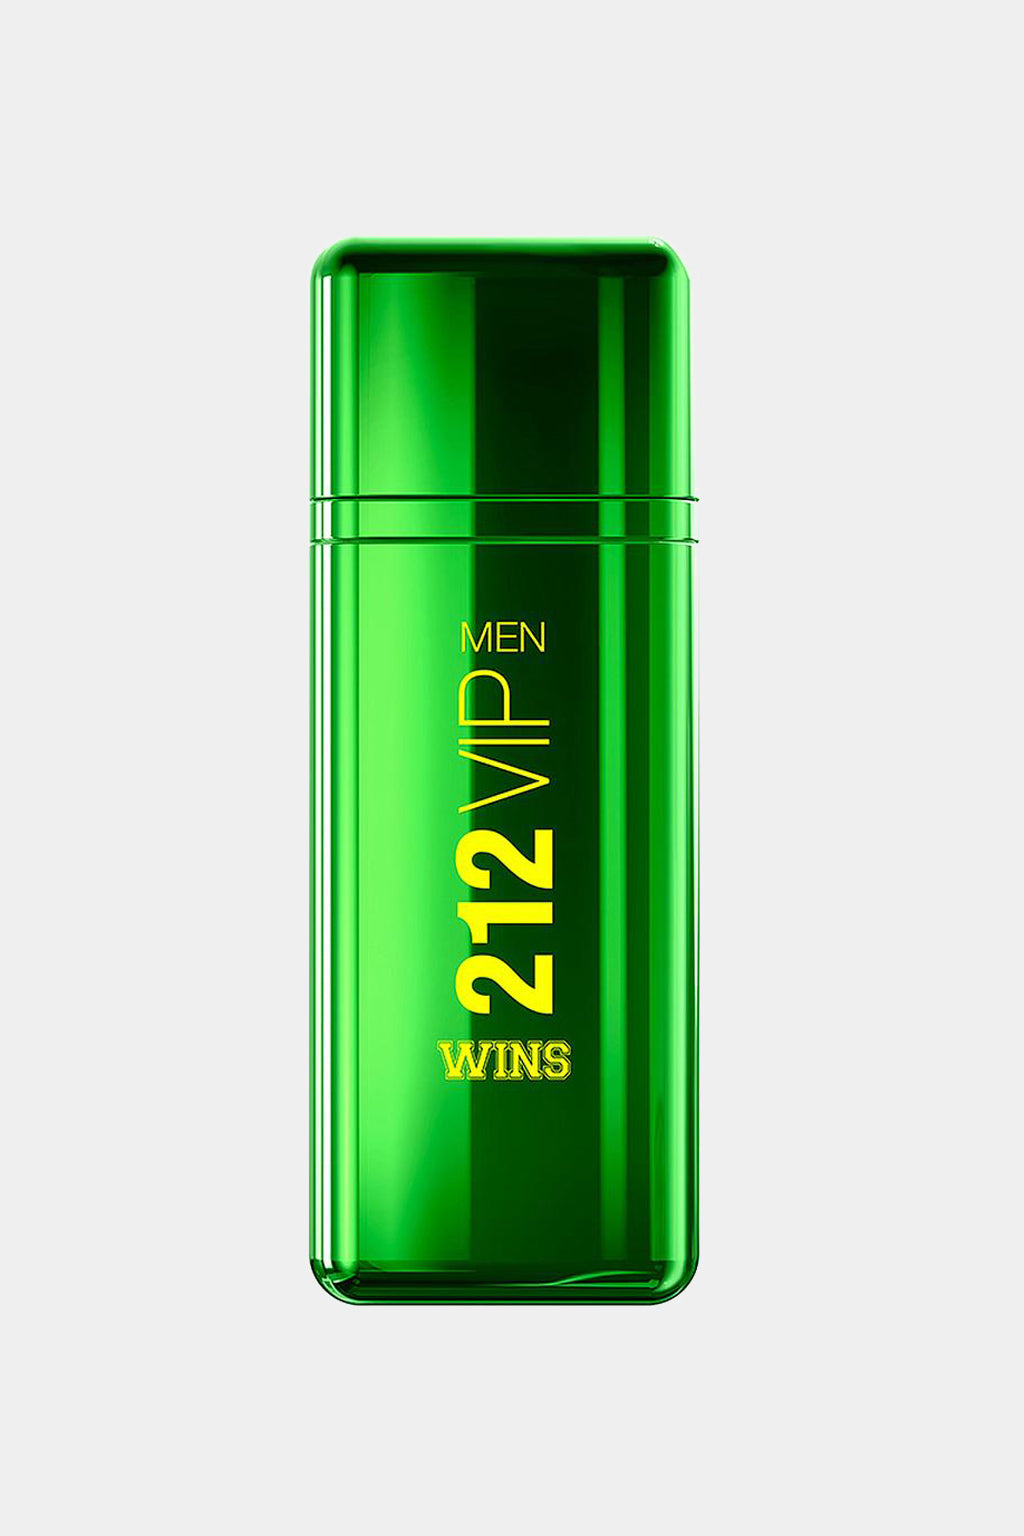 Carolina Herrera - 212 Vip Men Wins Limited Edition Eau de Parfum